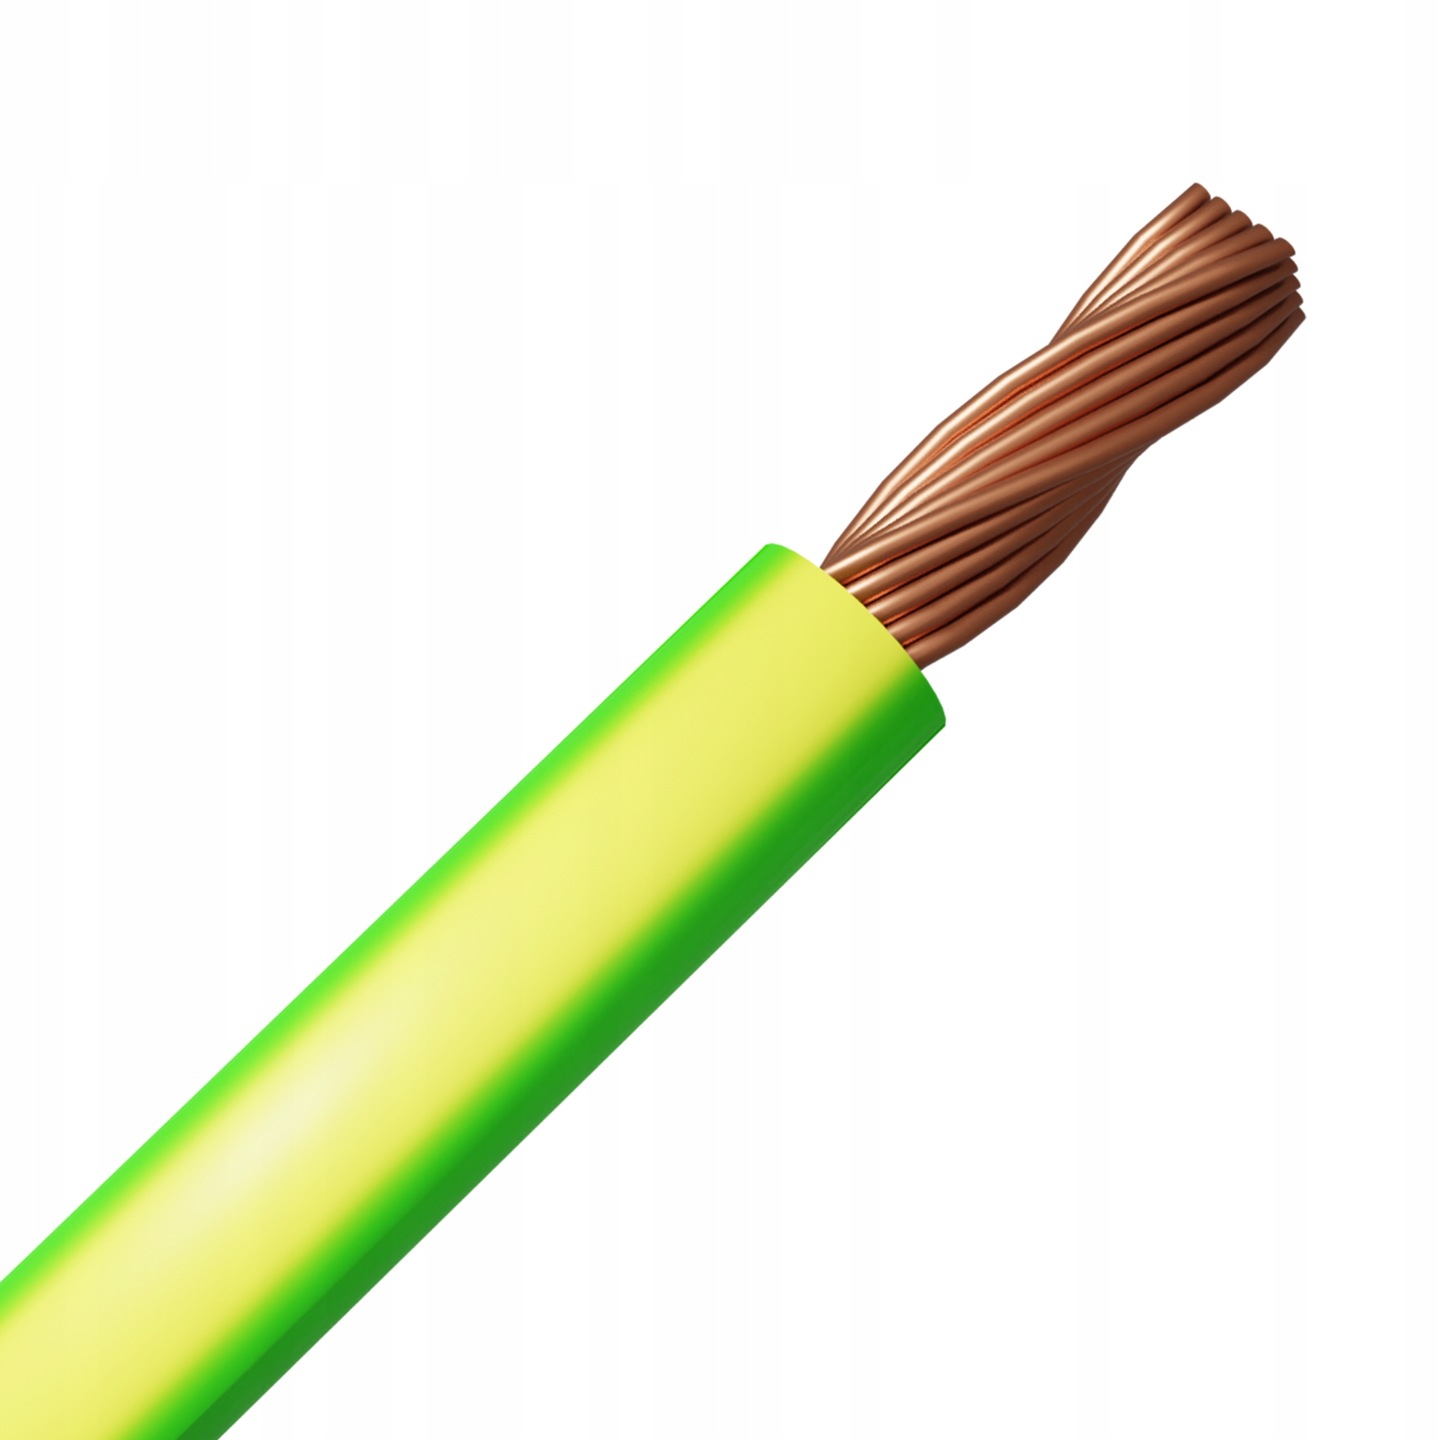 Przewód linka LgY żółto-zielony 6mm2 750V - 1m Telefonika Kable G-002966